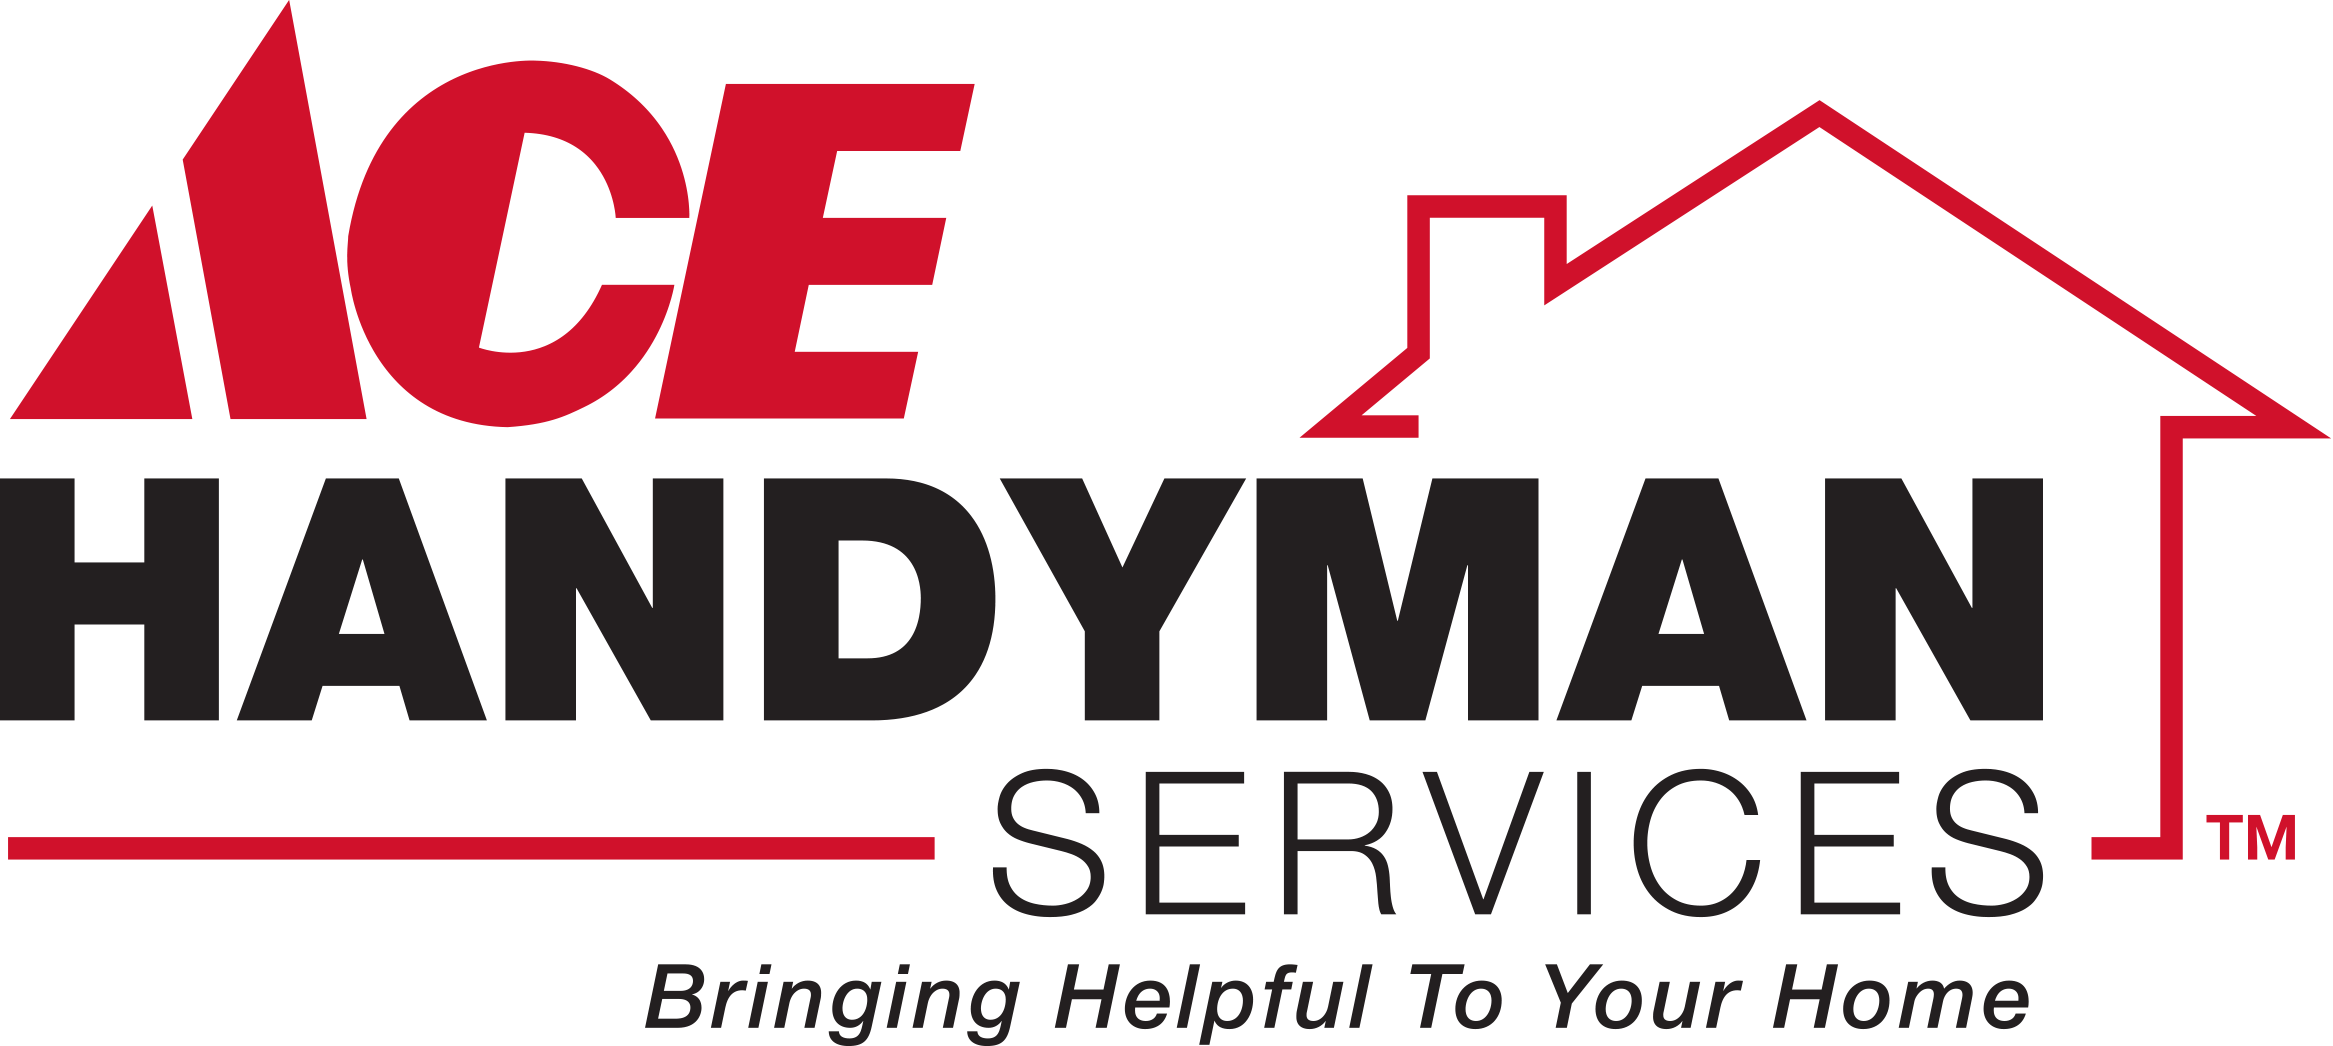 Ace Handyman Services Greater Lexington Logo